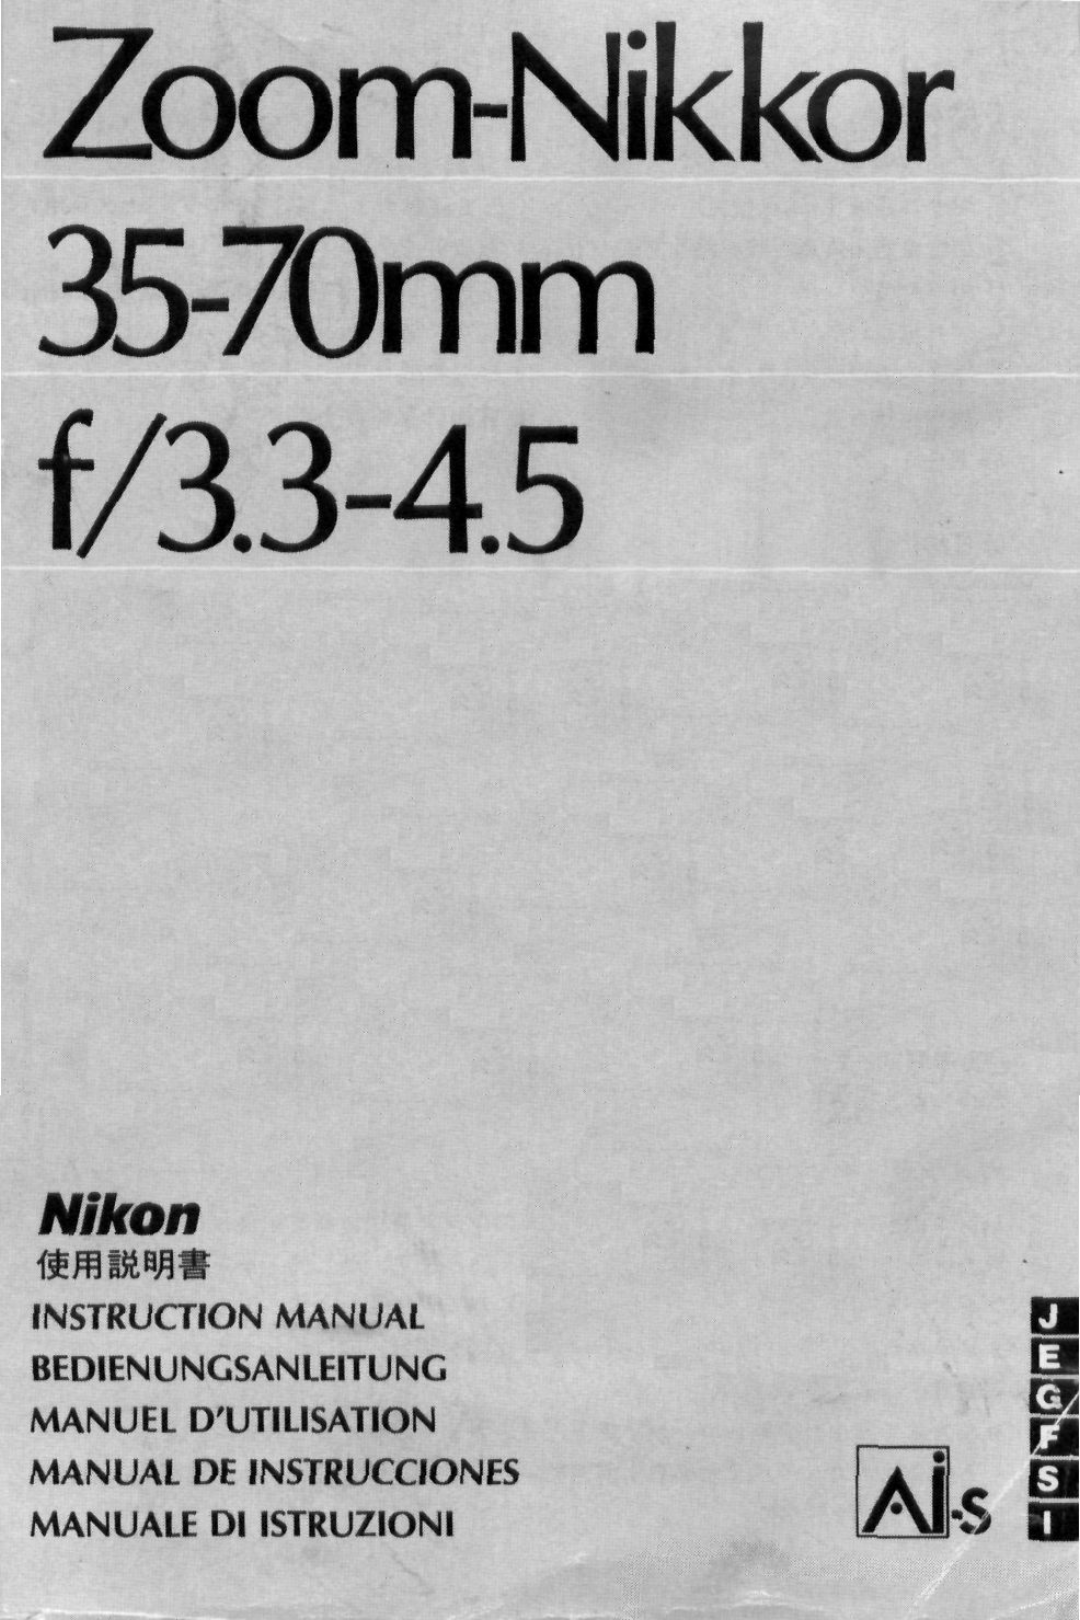 Nikon f instruction manual Instruction Manual, Bedienungsanleitunc, Manuel Dutilisation, Manual De Instrucciones, ~jj~ m 